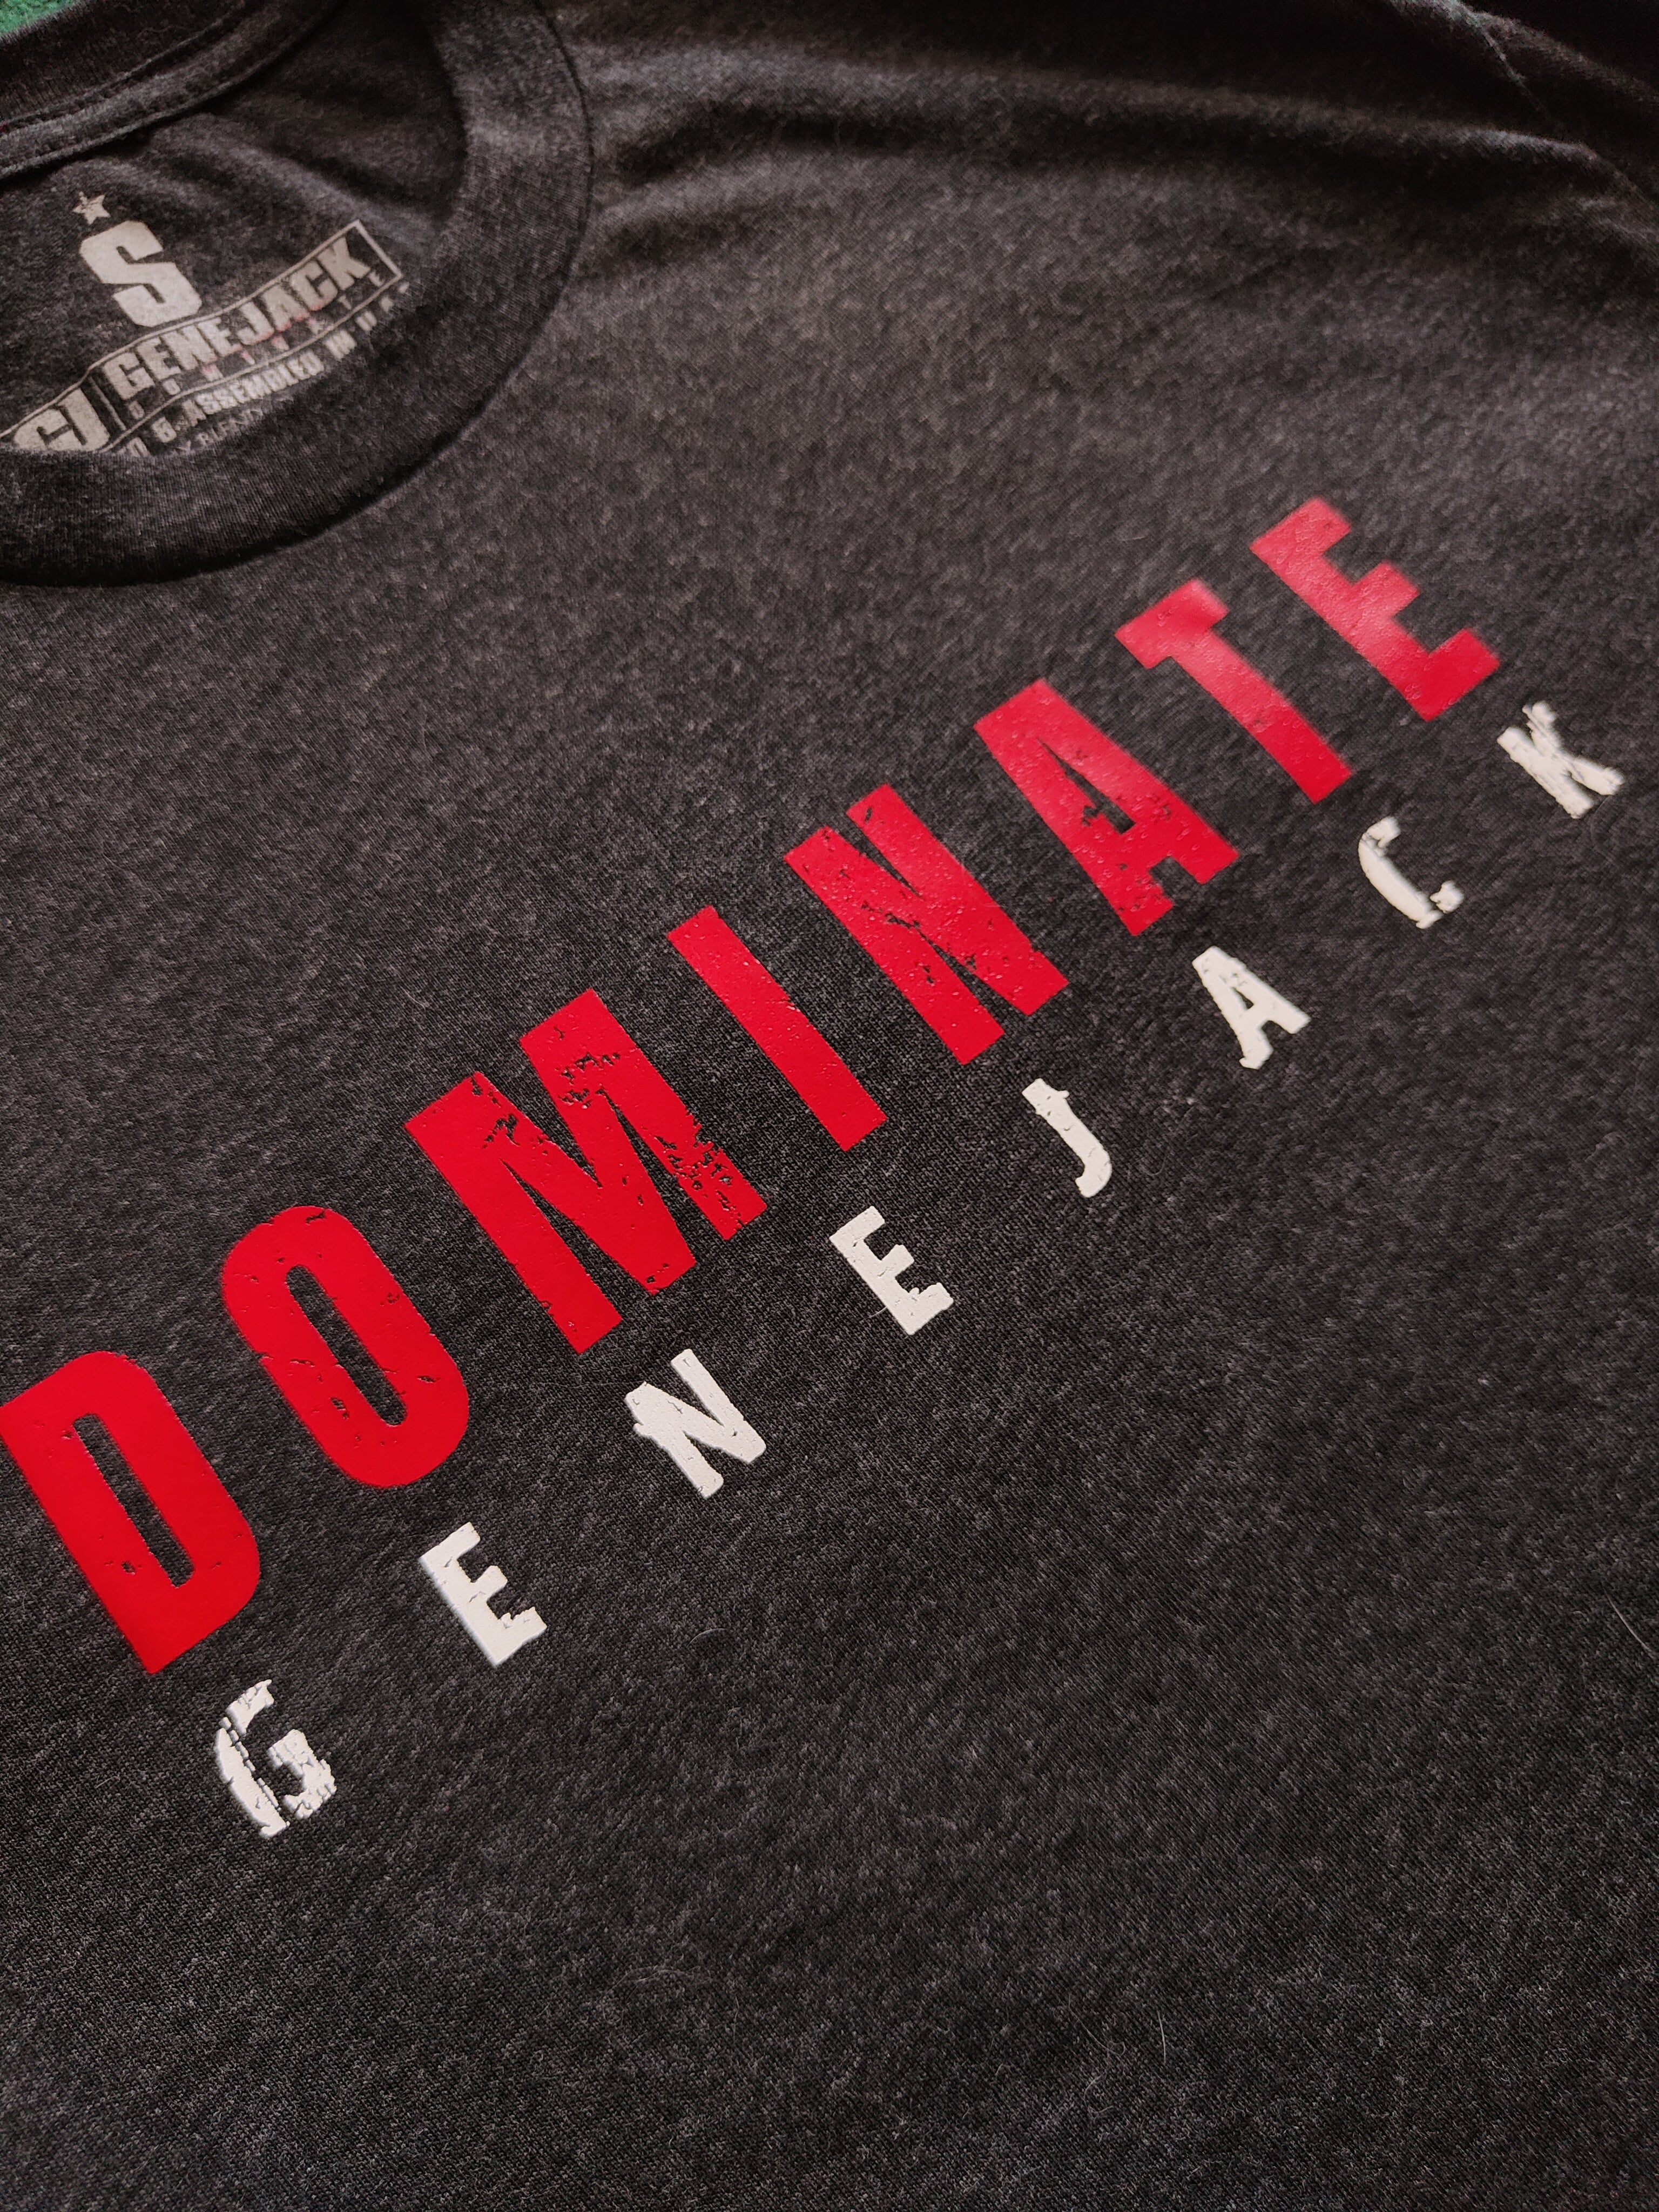 Dominate T-shirt - Men from Genejack for Genejack WOD